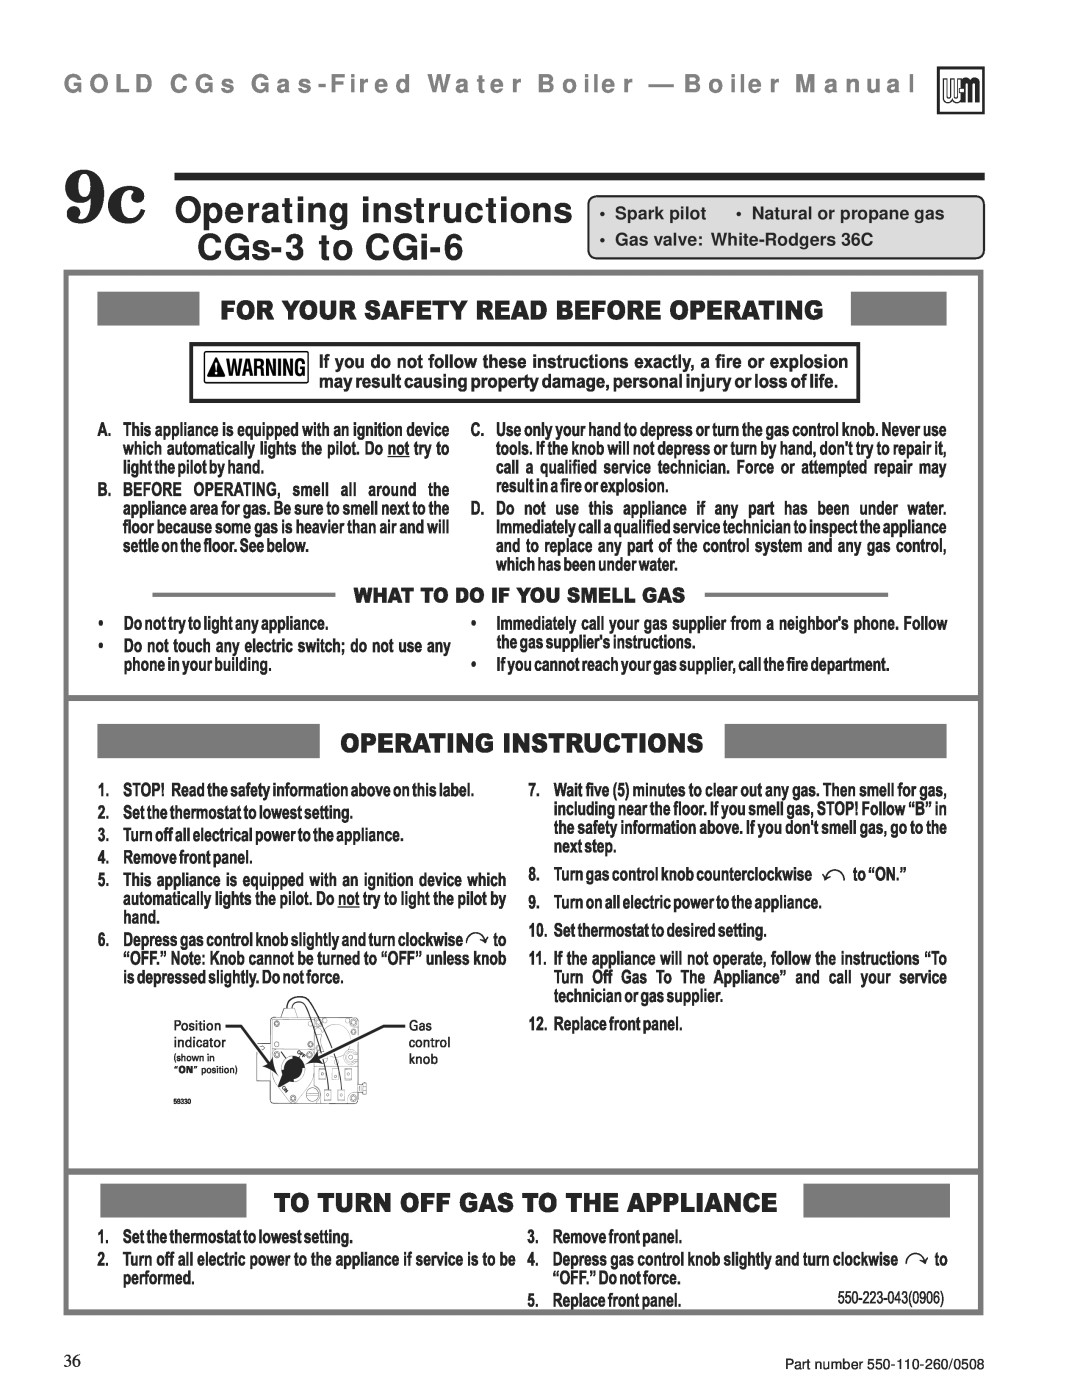 Weil-McLain 550-110-260/0508 manual 9c Operating instructions CGs-3to CGi-6, GOLD CGs Gas-FiredWater Boiler - Boiler Manual 